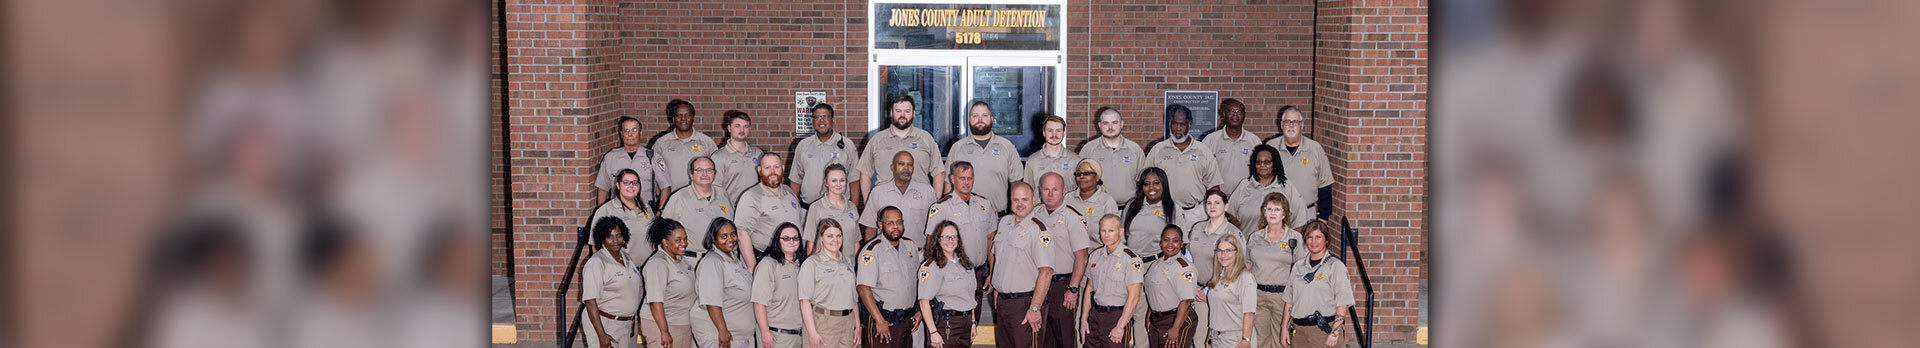 Jones County Sheriff's office personnel photo